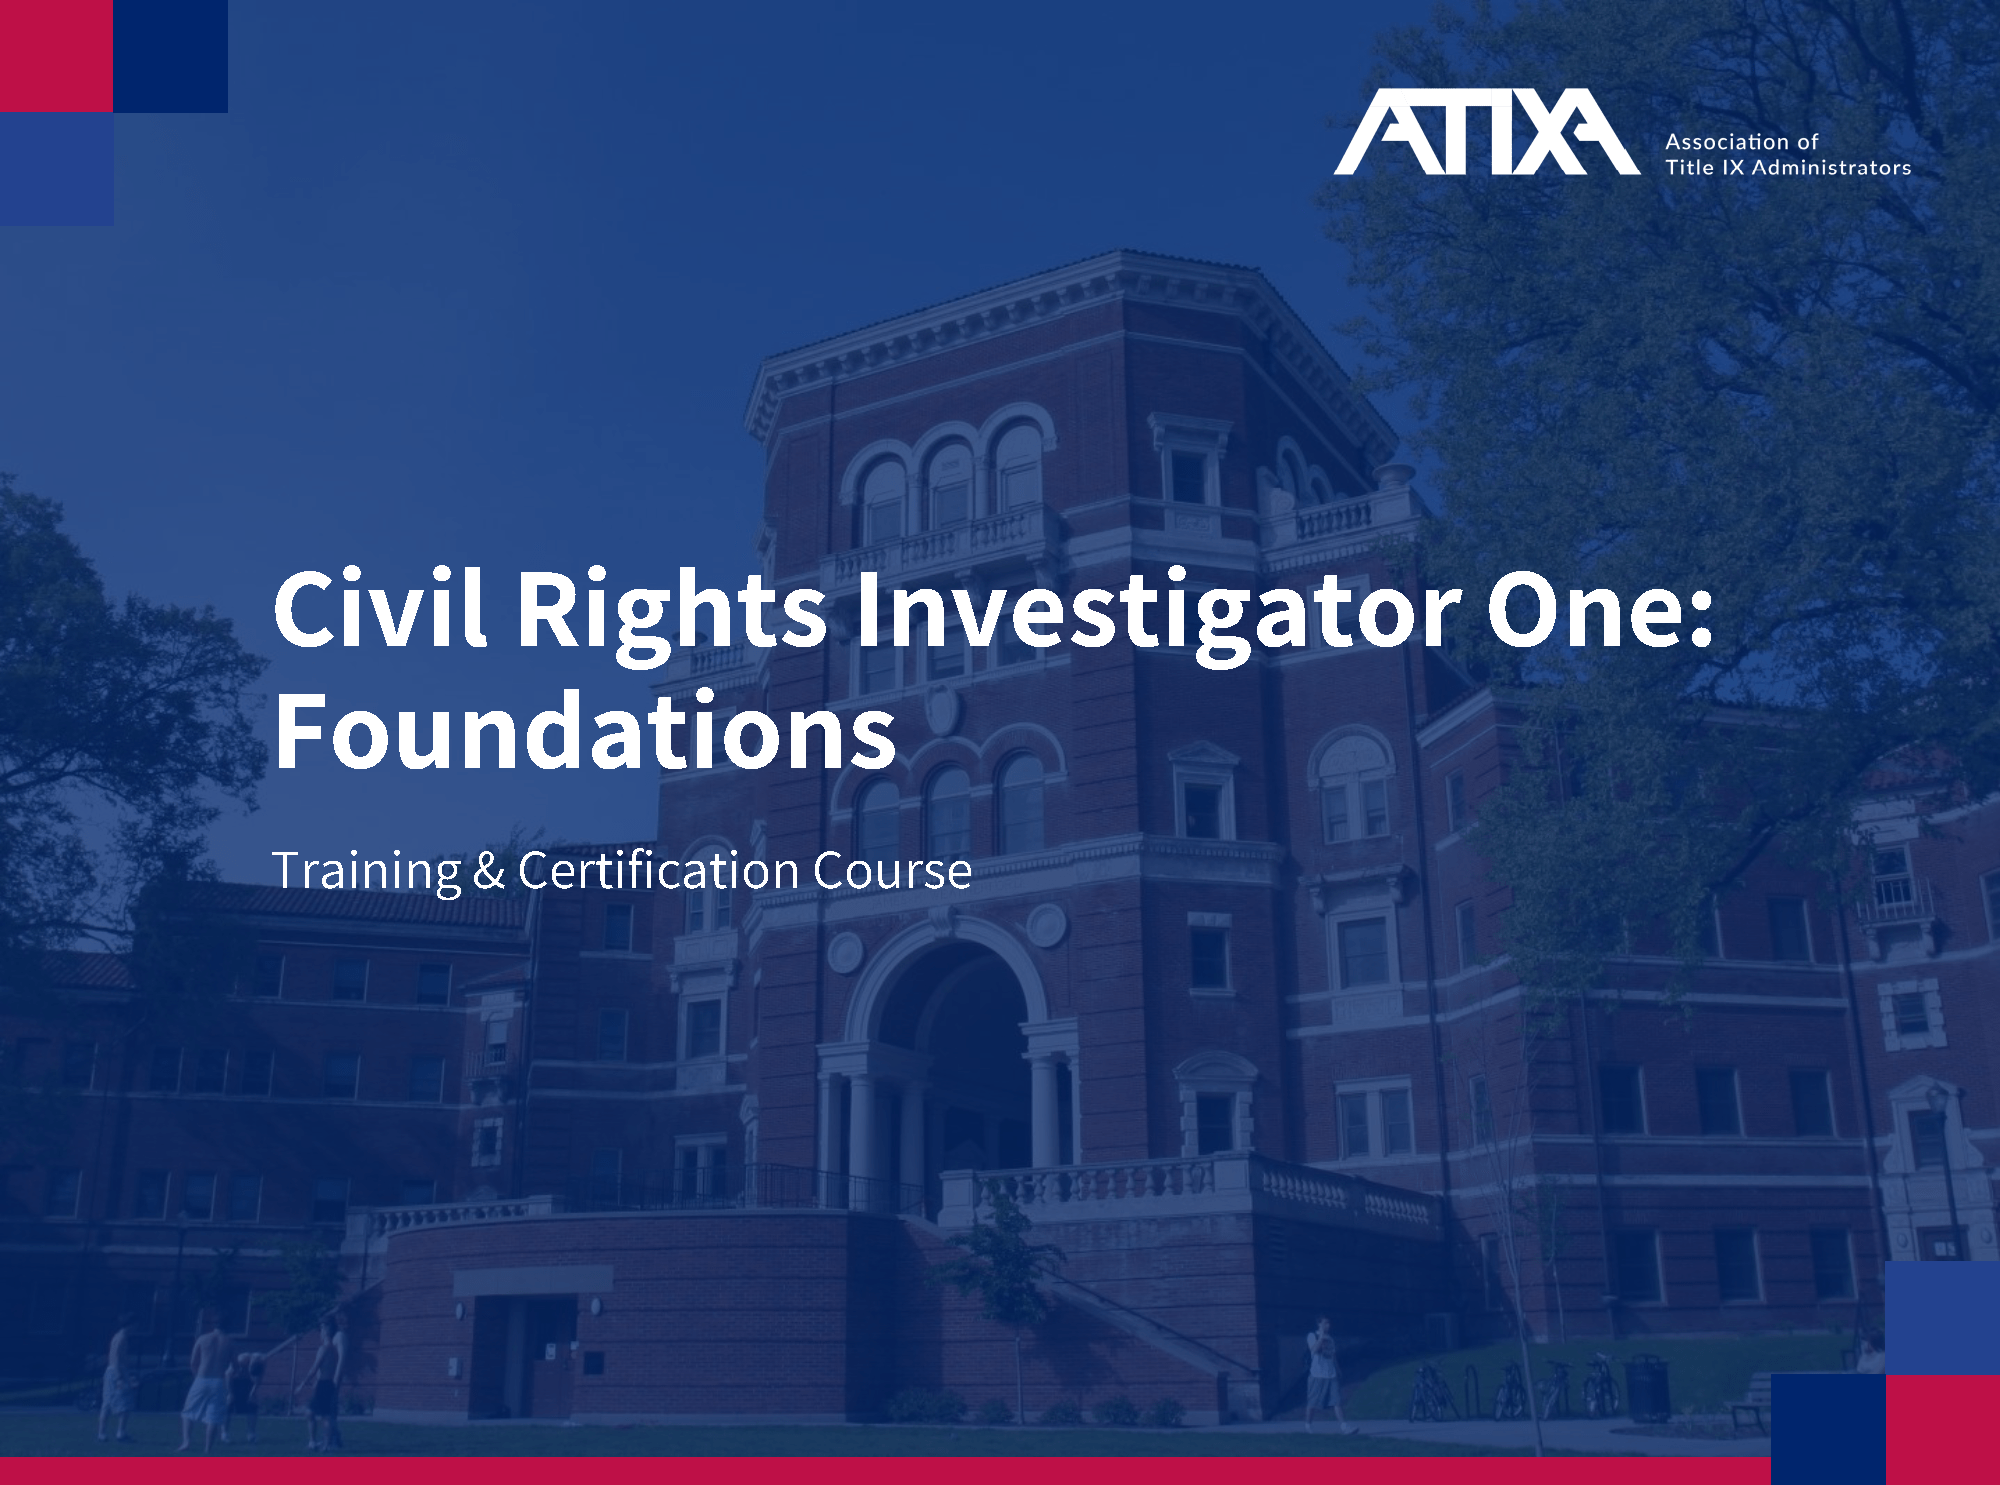 Title IX-Civil Rights Page 1